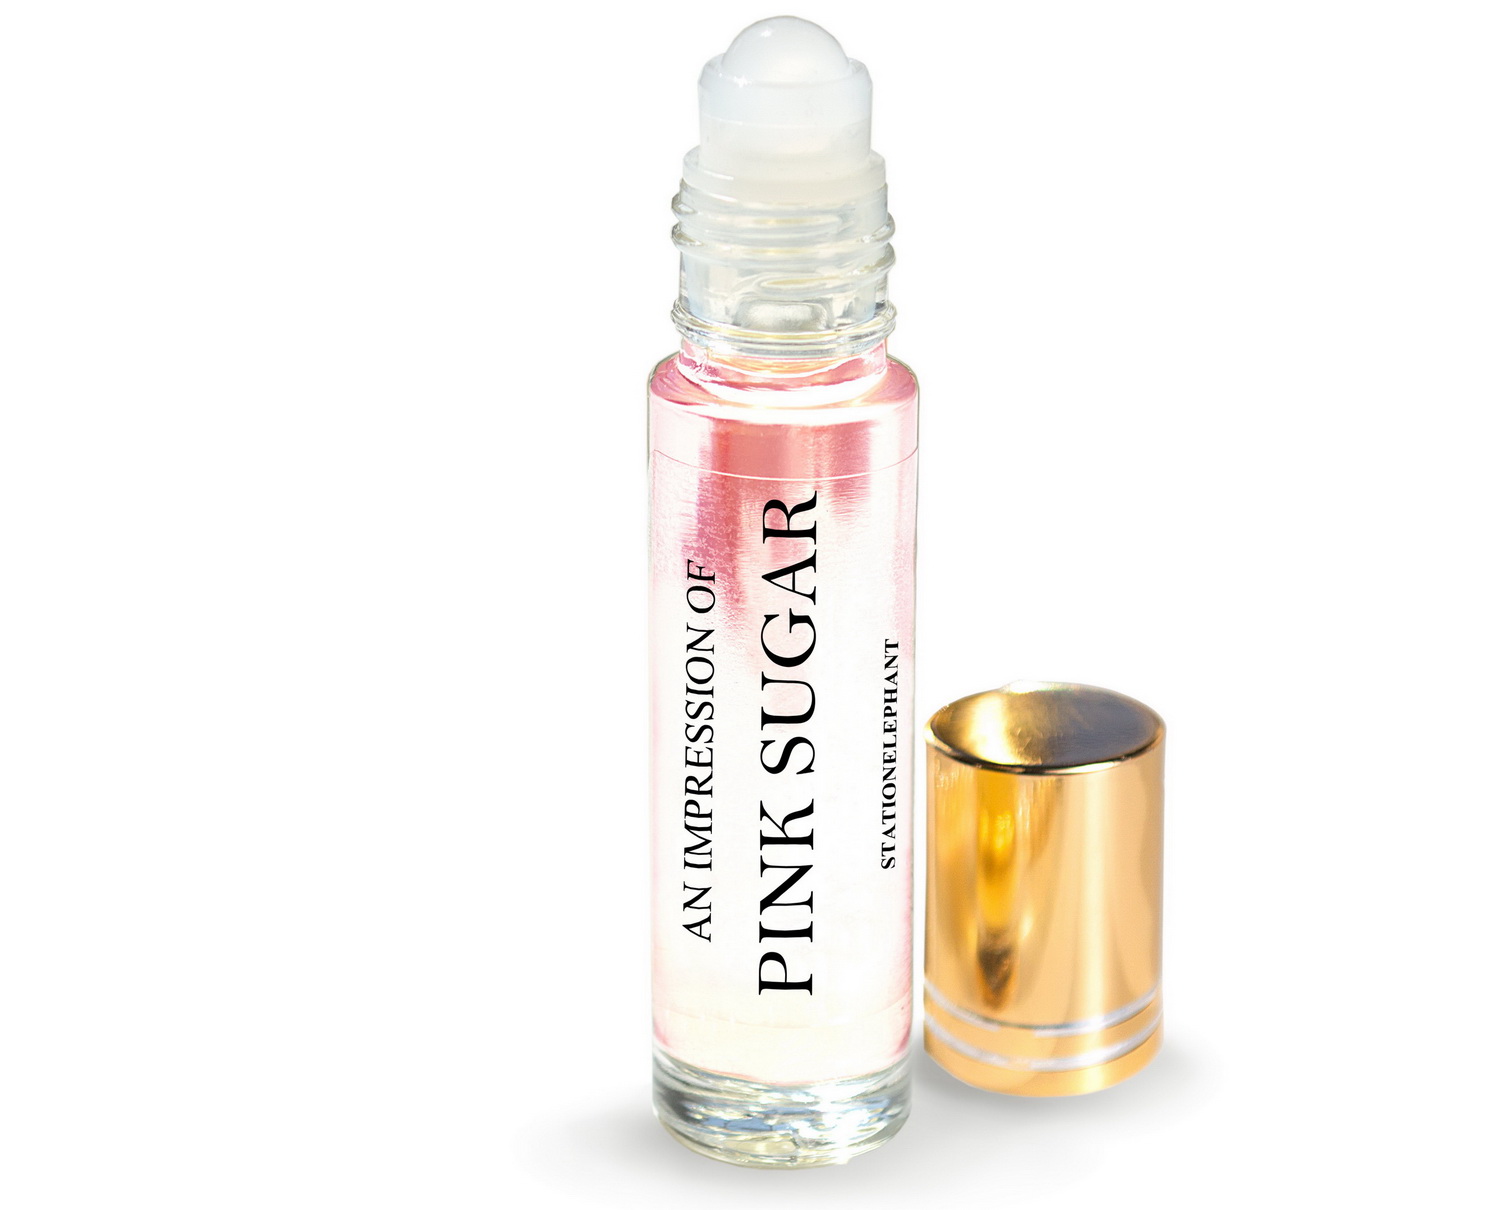 Pink Sugar inspired-type Perfumed Body Oil BEST SELLING FRAGRANCE